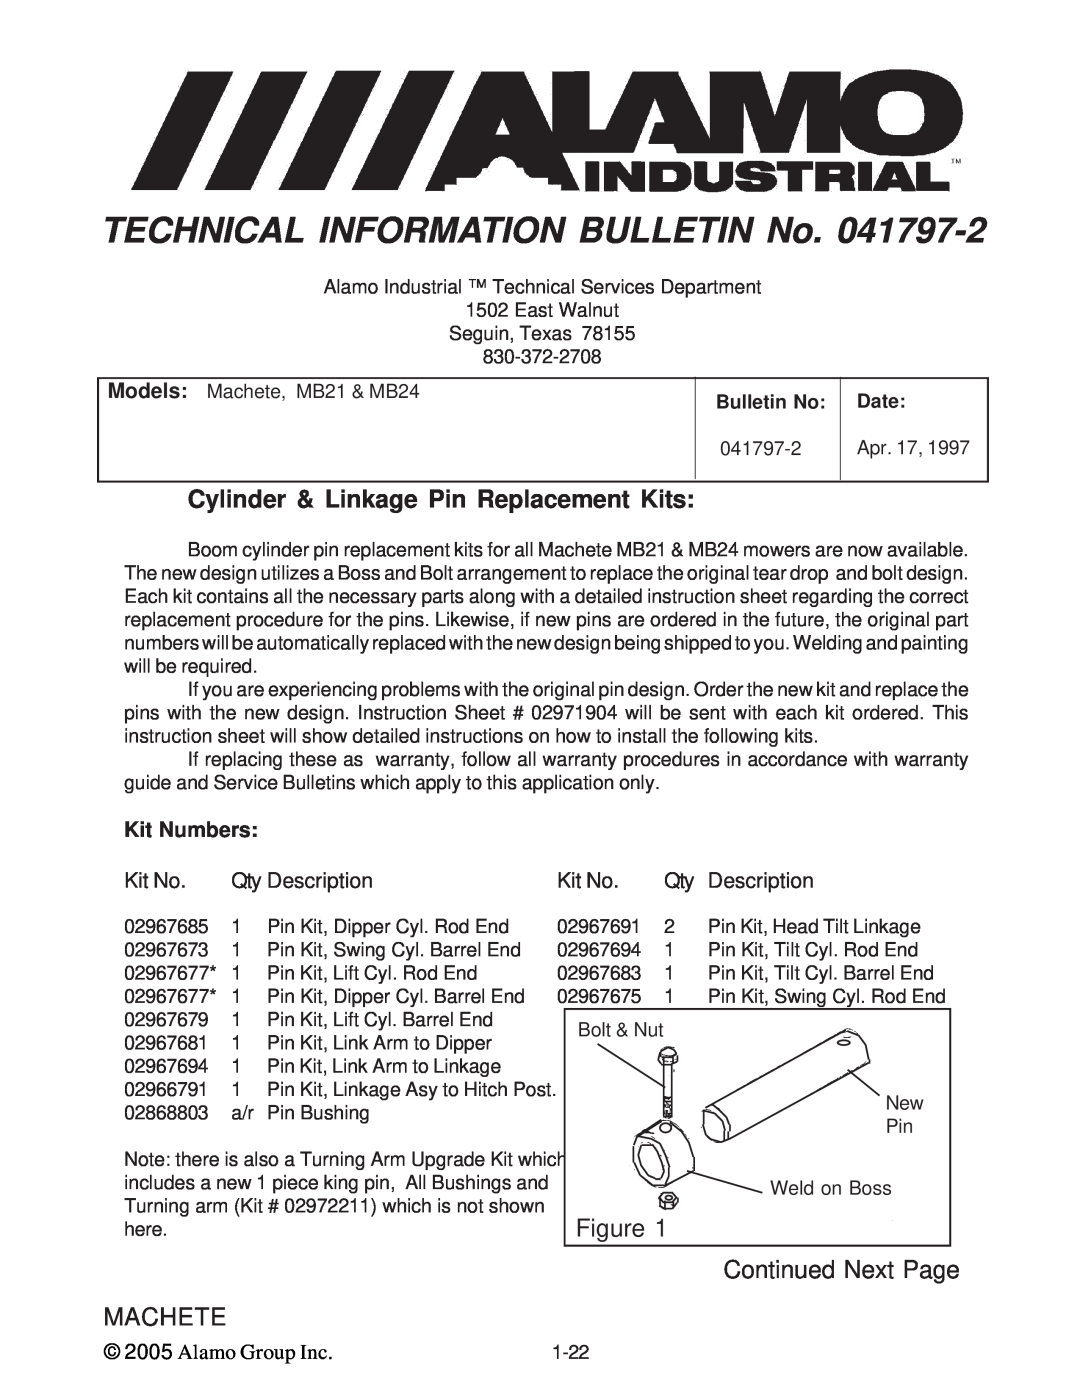 Alamo T 7740 Cylinder & Linkage Pin Replacement Kits, Kit Numbers, Kit No, Qty Description, Figure, Alamo Group Inc, Date 